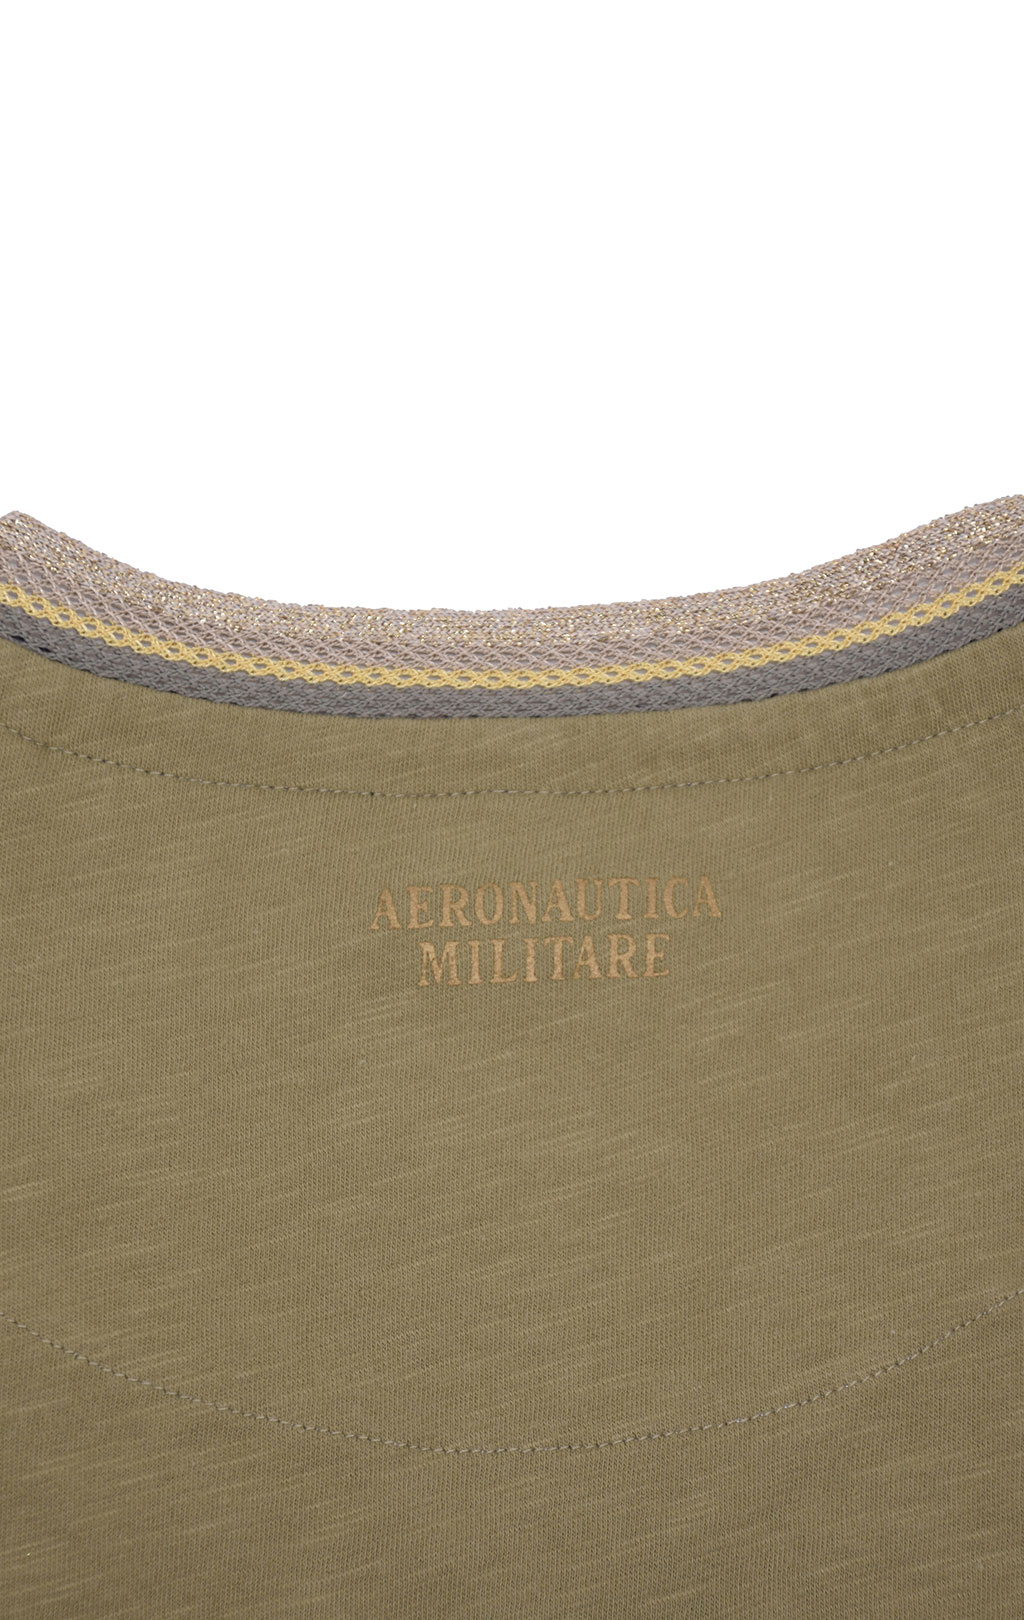 Женская футболка AERONAUTICA MILITARE SS19 verde chiaro (TS 1592) 